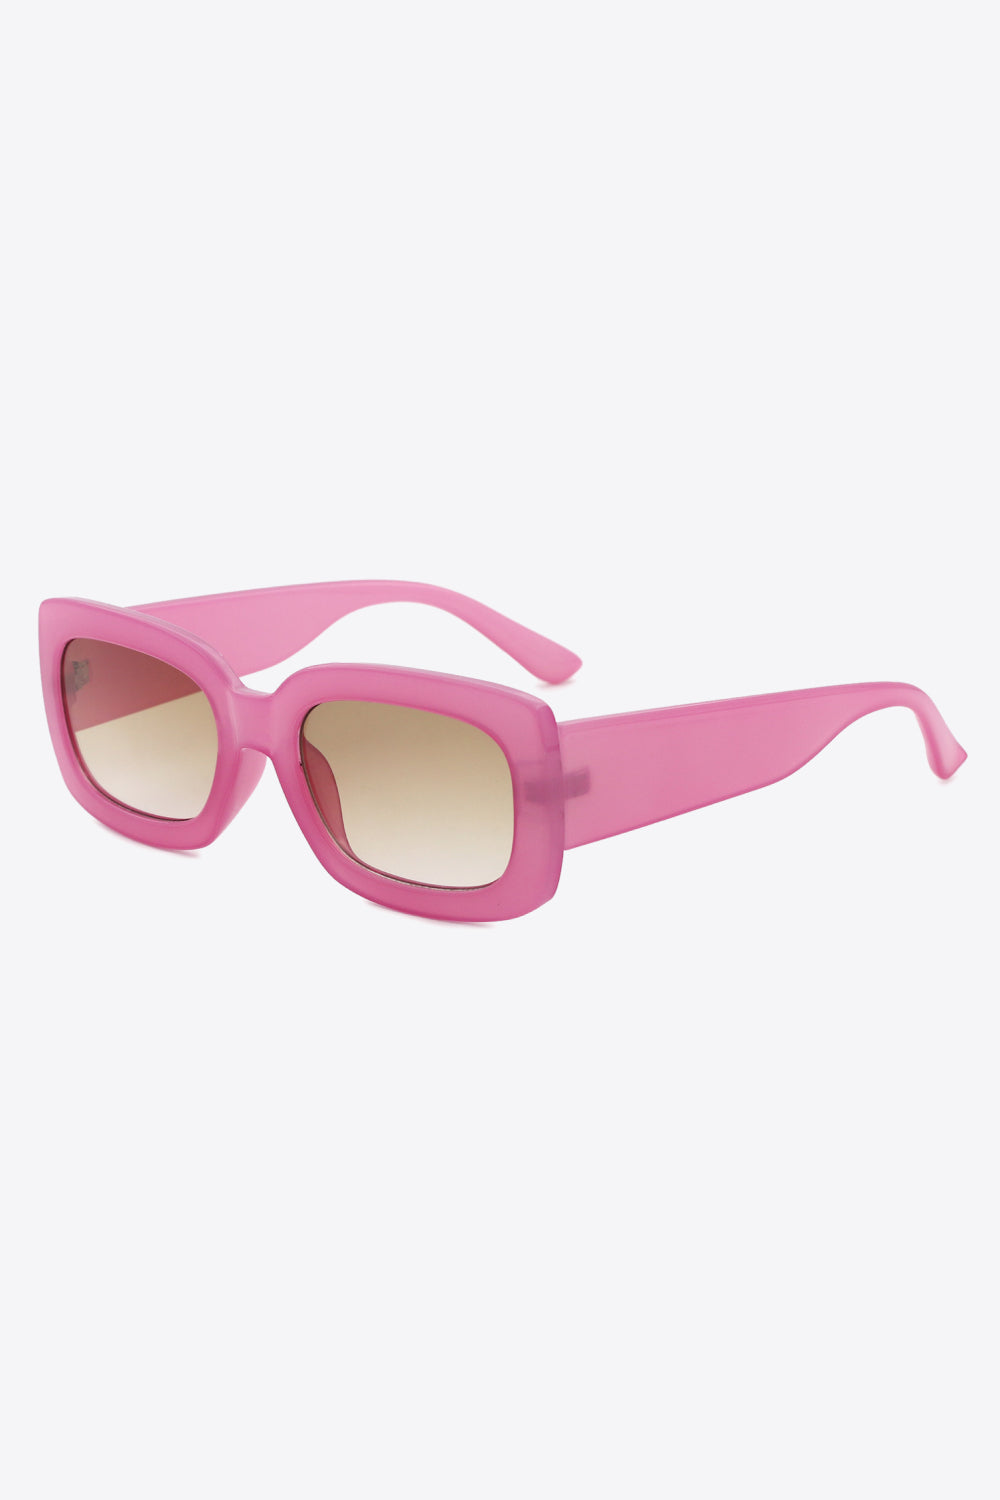 Villa Blvd Angle Rectangle Sunglasses ☛ Multiple Colors Available ☚